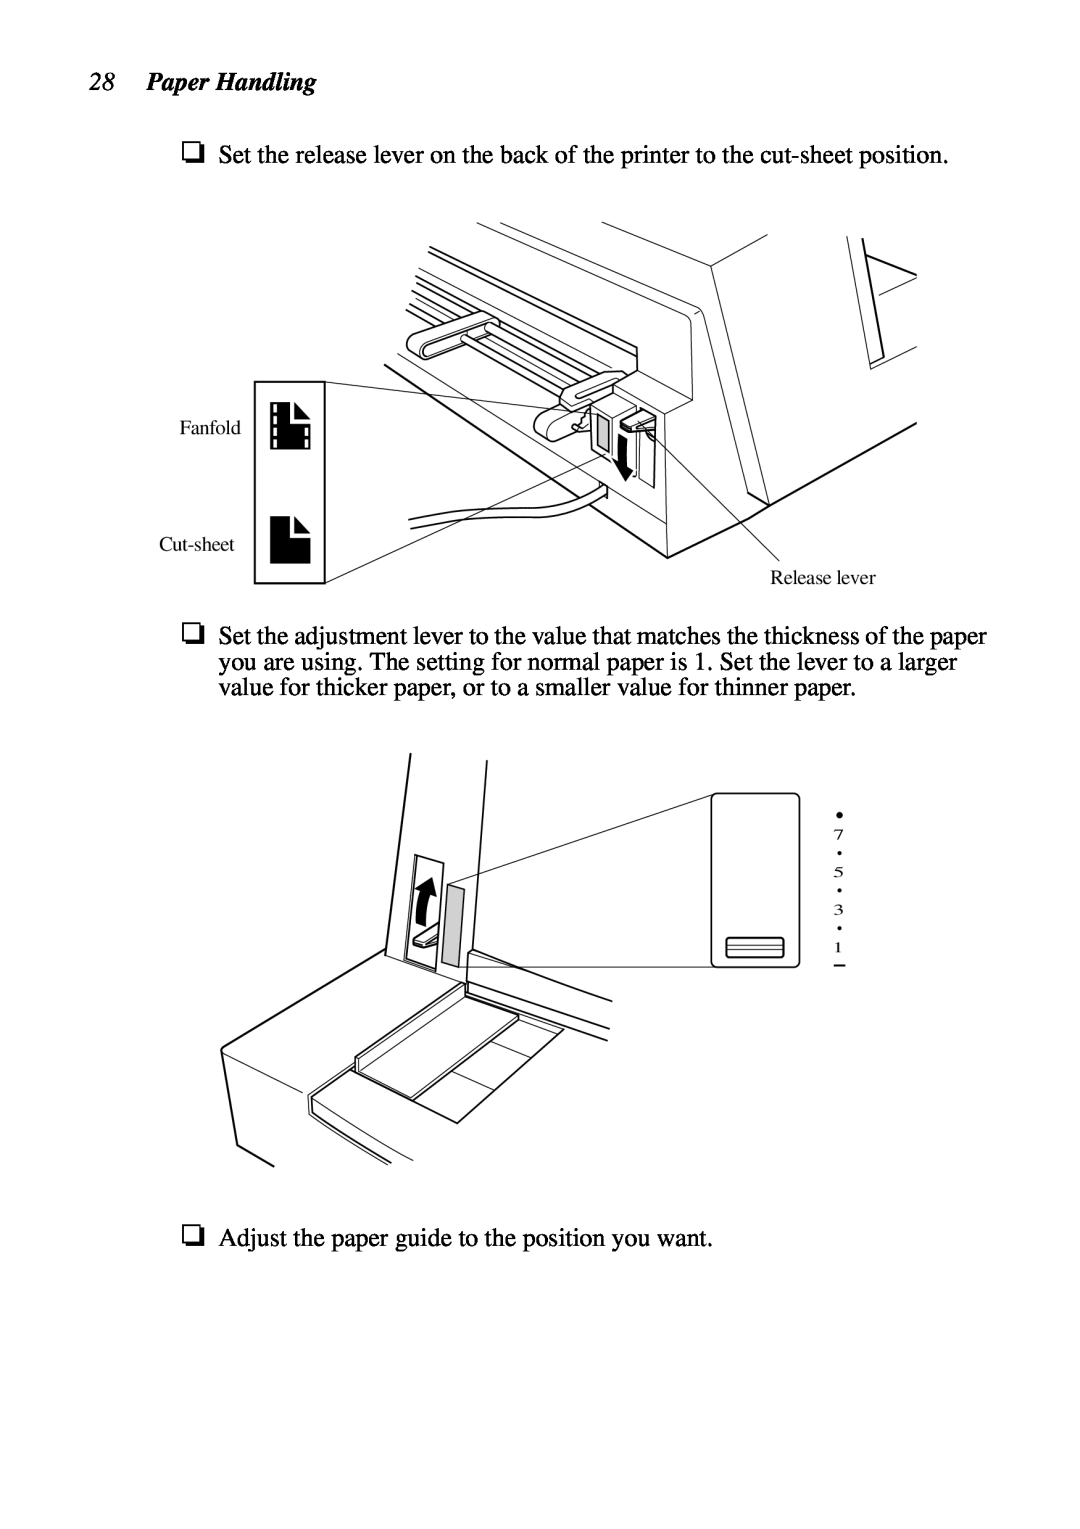 Star Micronics LC-6211 user manual Paper Handling 